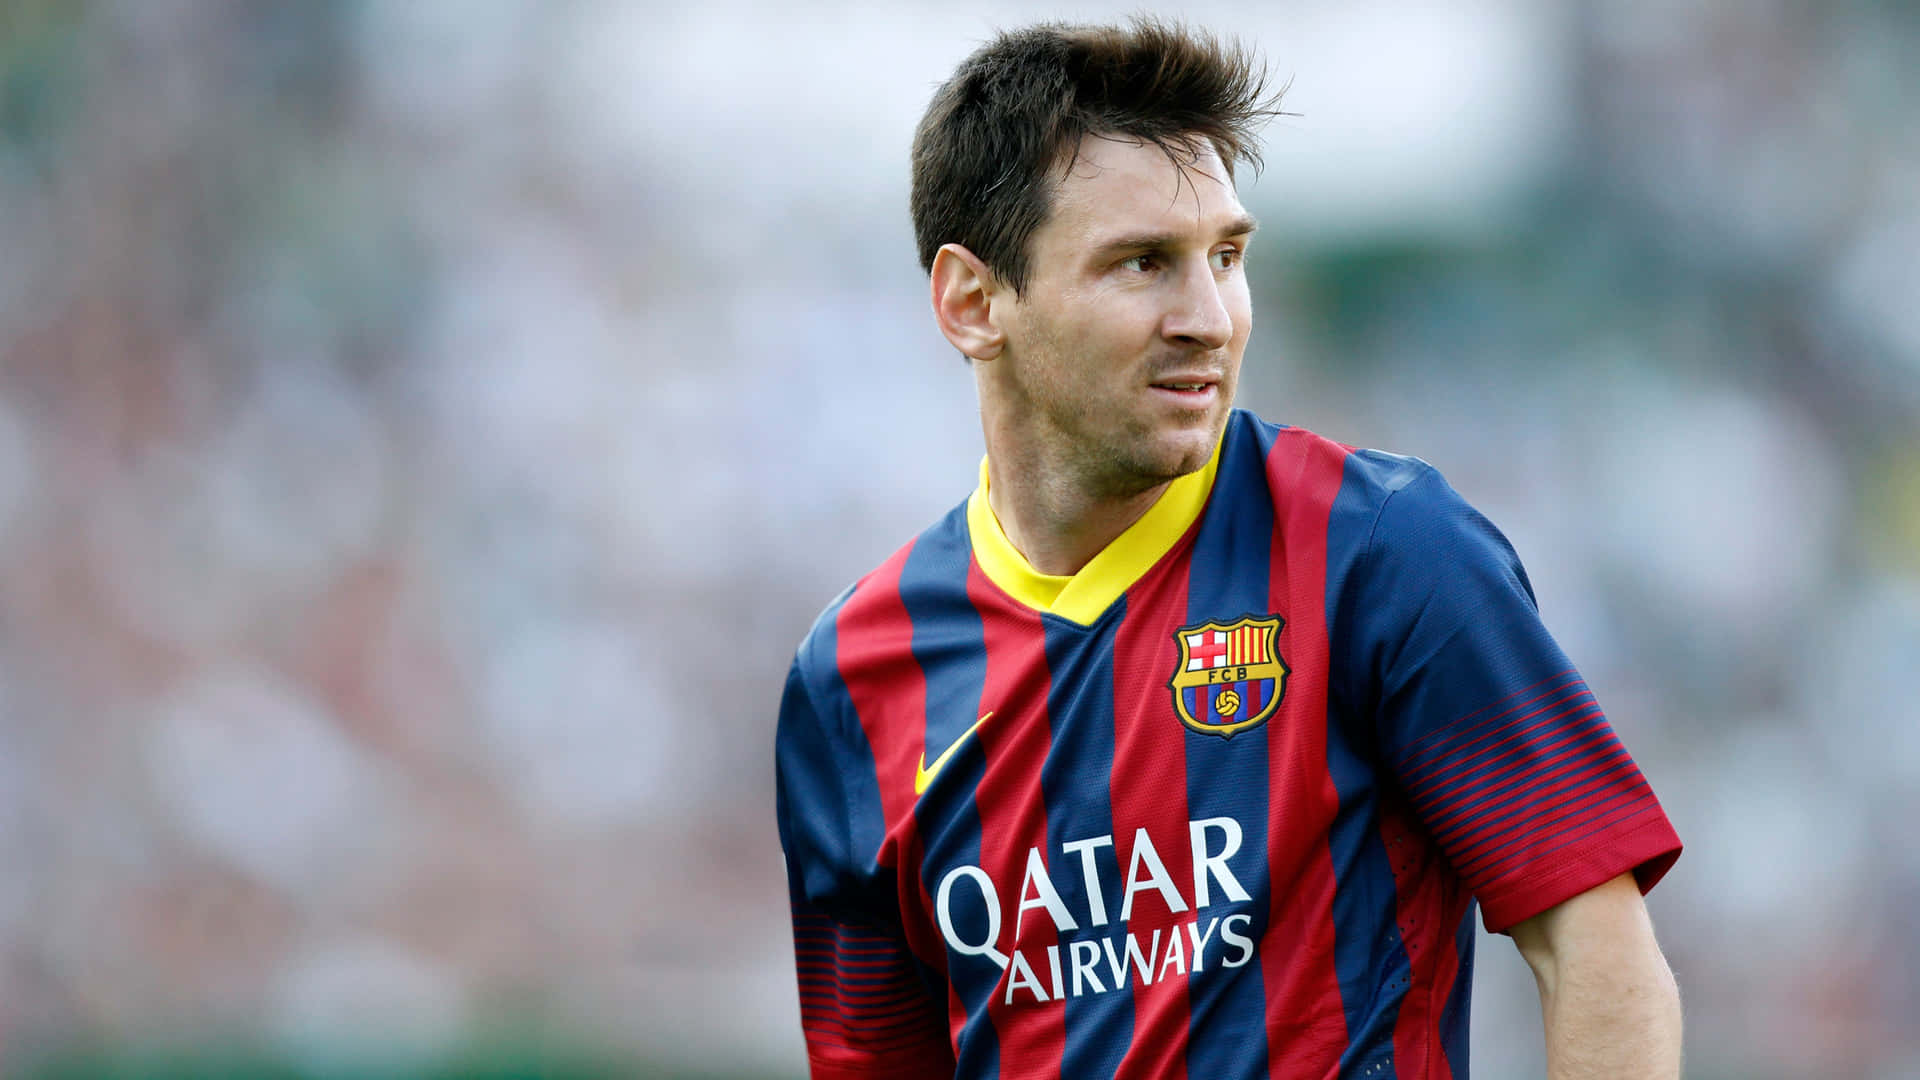 Lionel Messi Barcelona Uniform Qatar Airways Sponsor Wallpaper